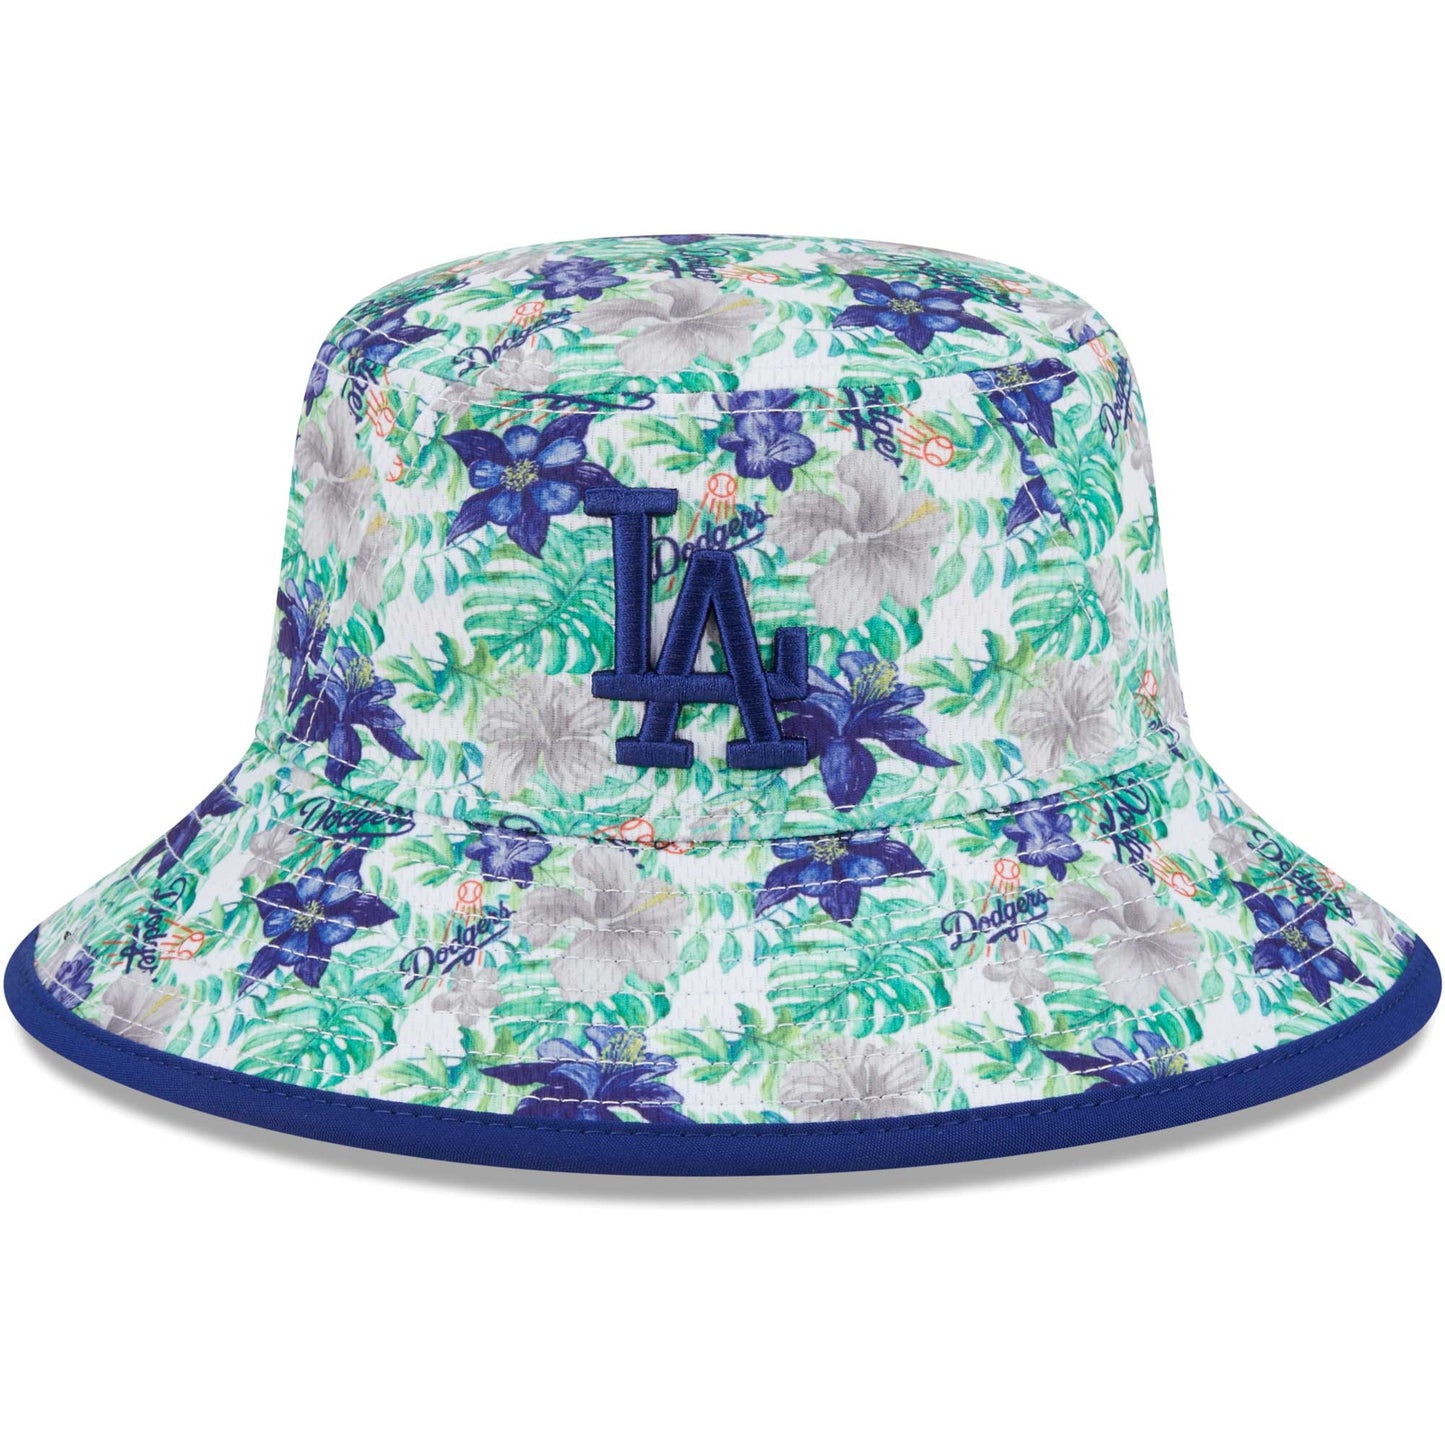 Los Angeles Dodgers New Era Tropic Floral Bucket Hat